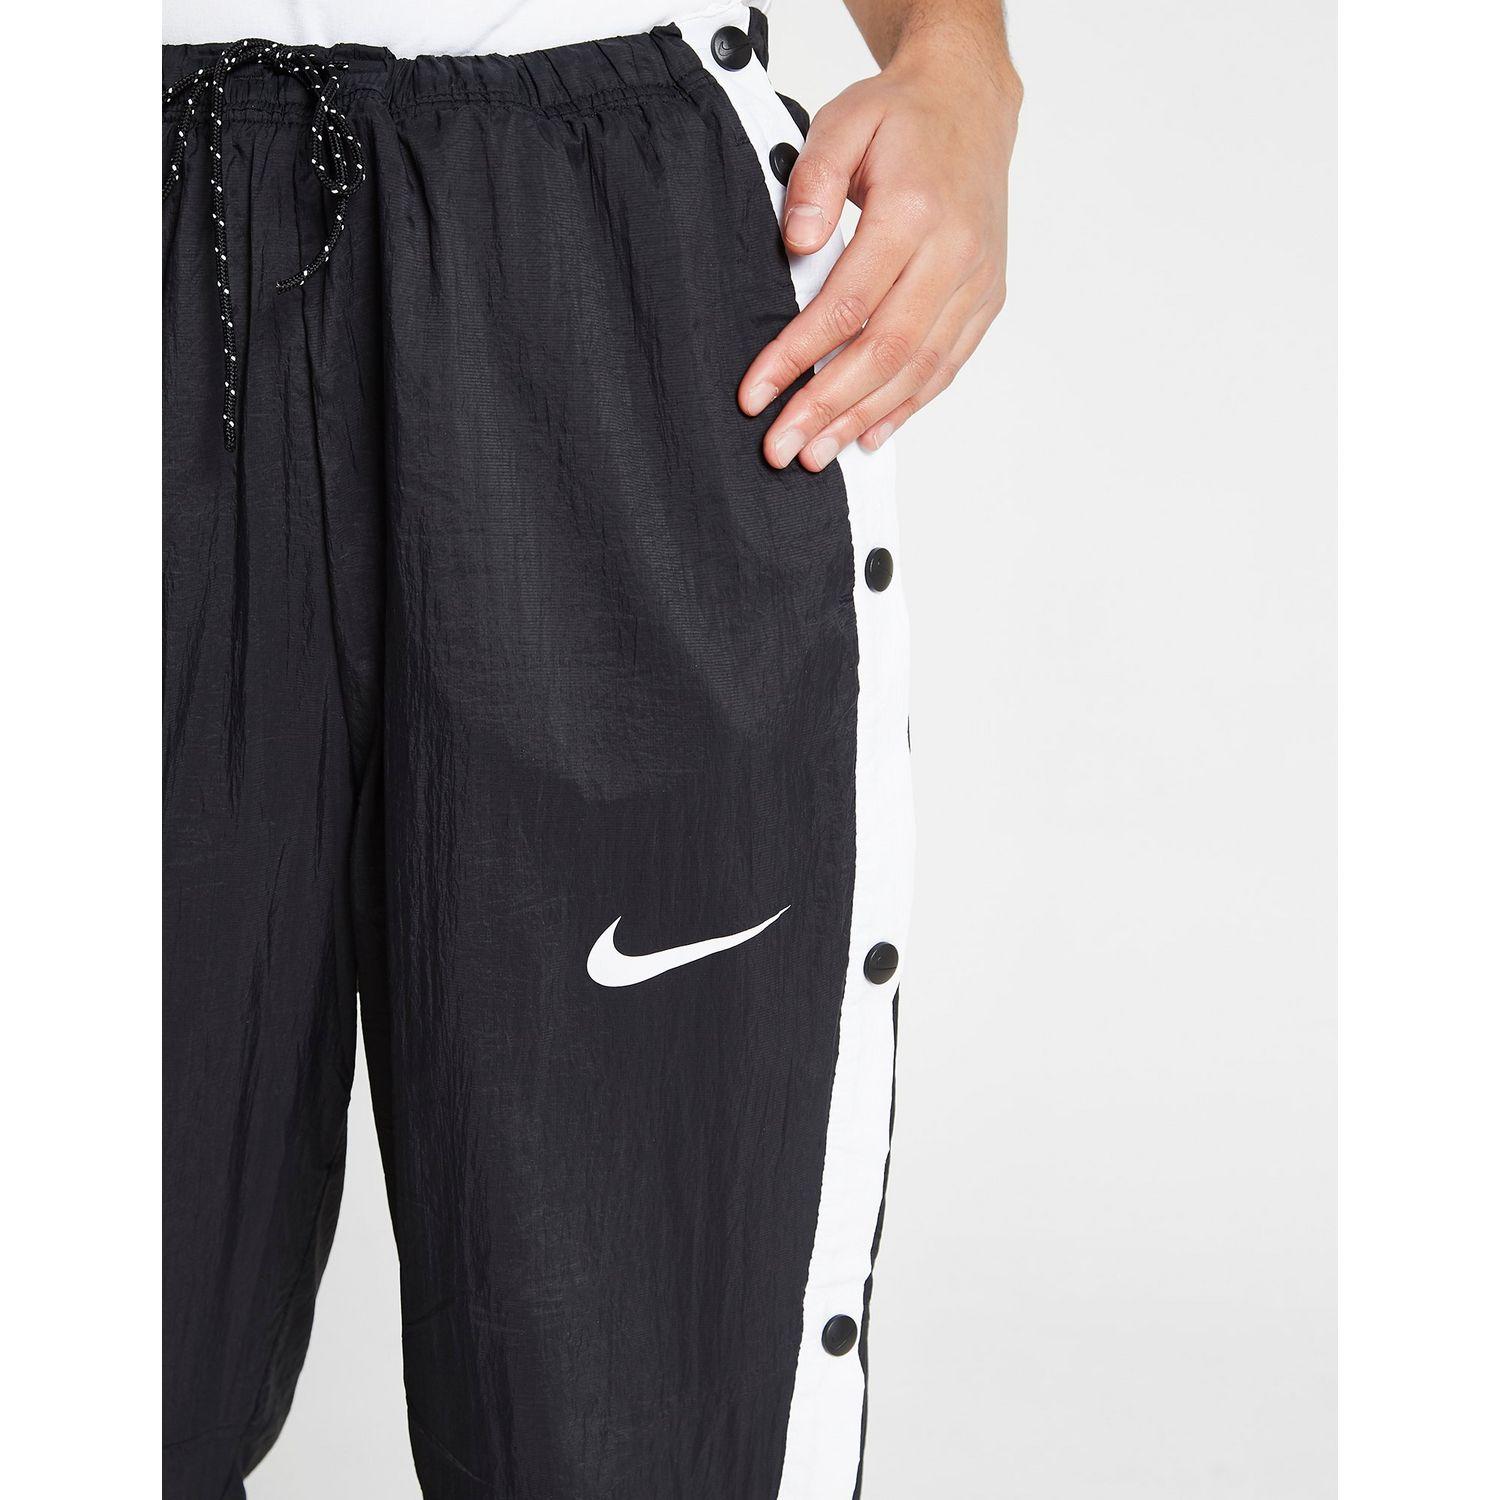 Nike Synthetic Popper Pants Womens in Black/White (Black) - Lyst